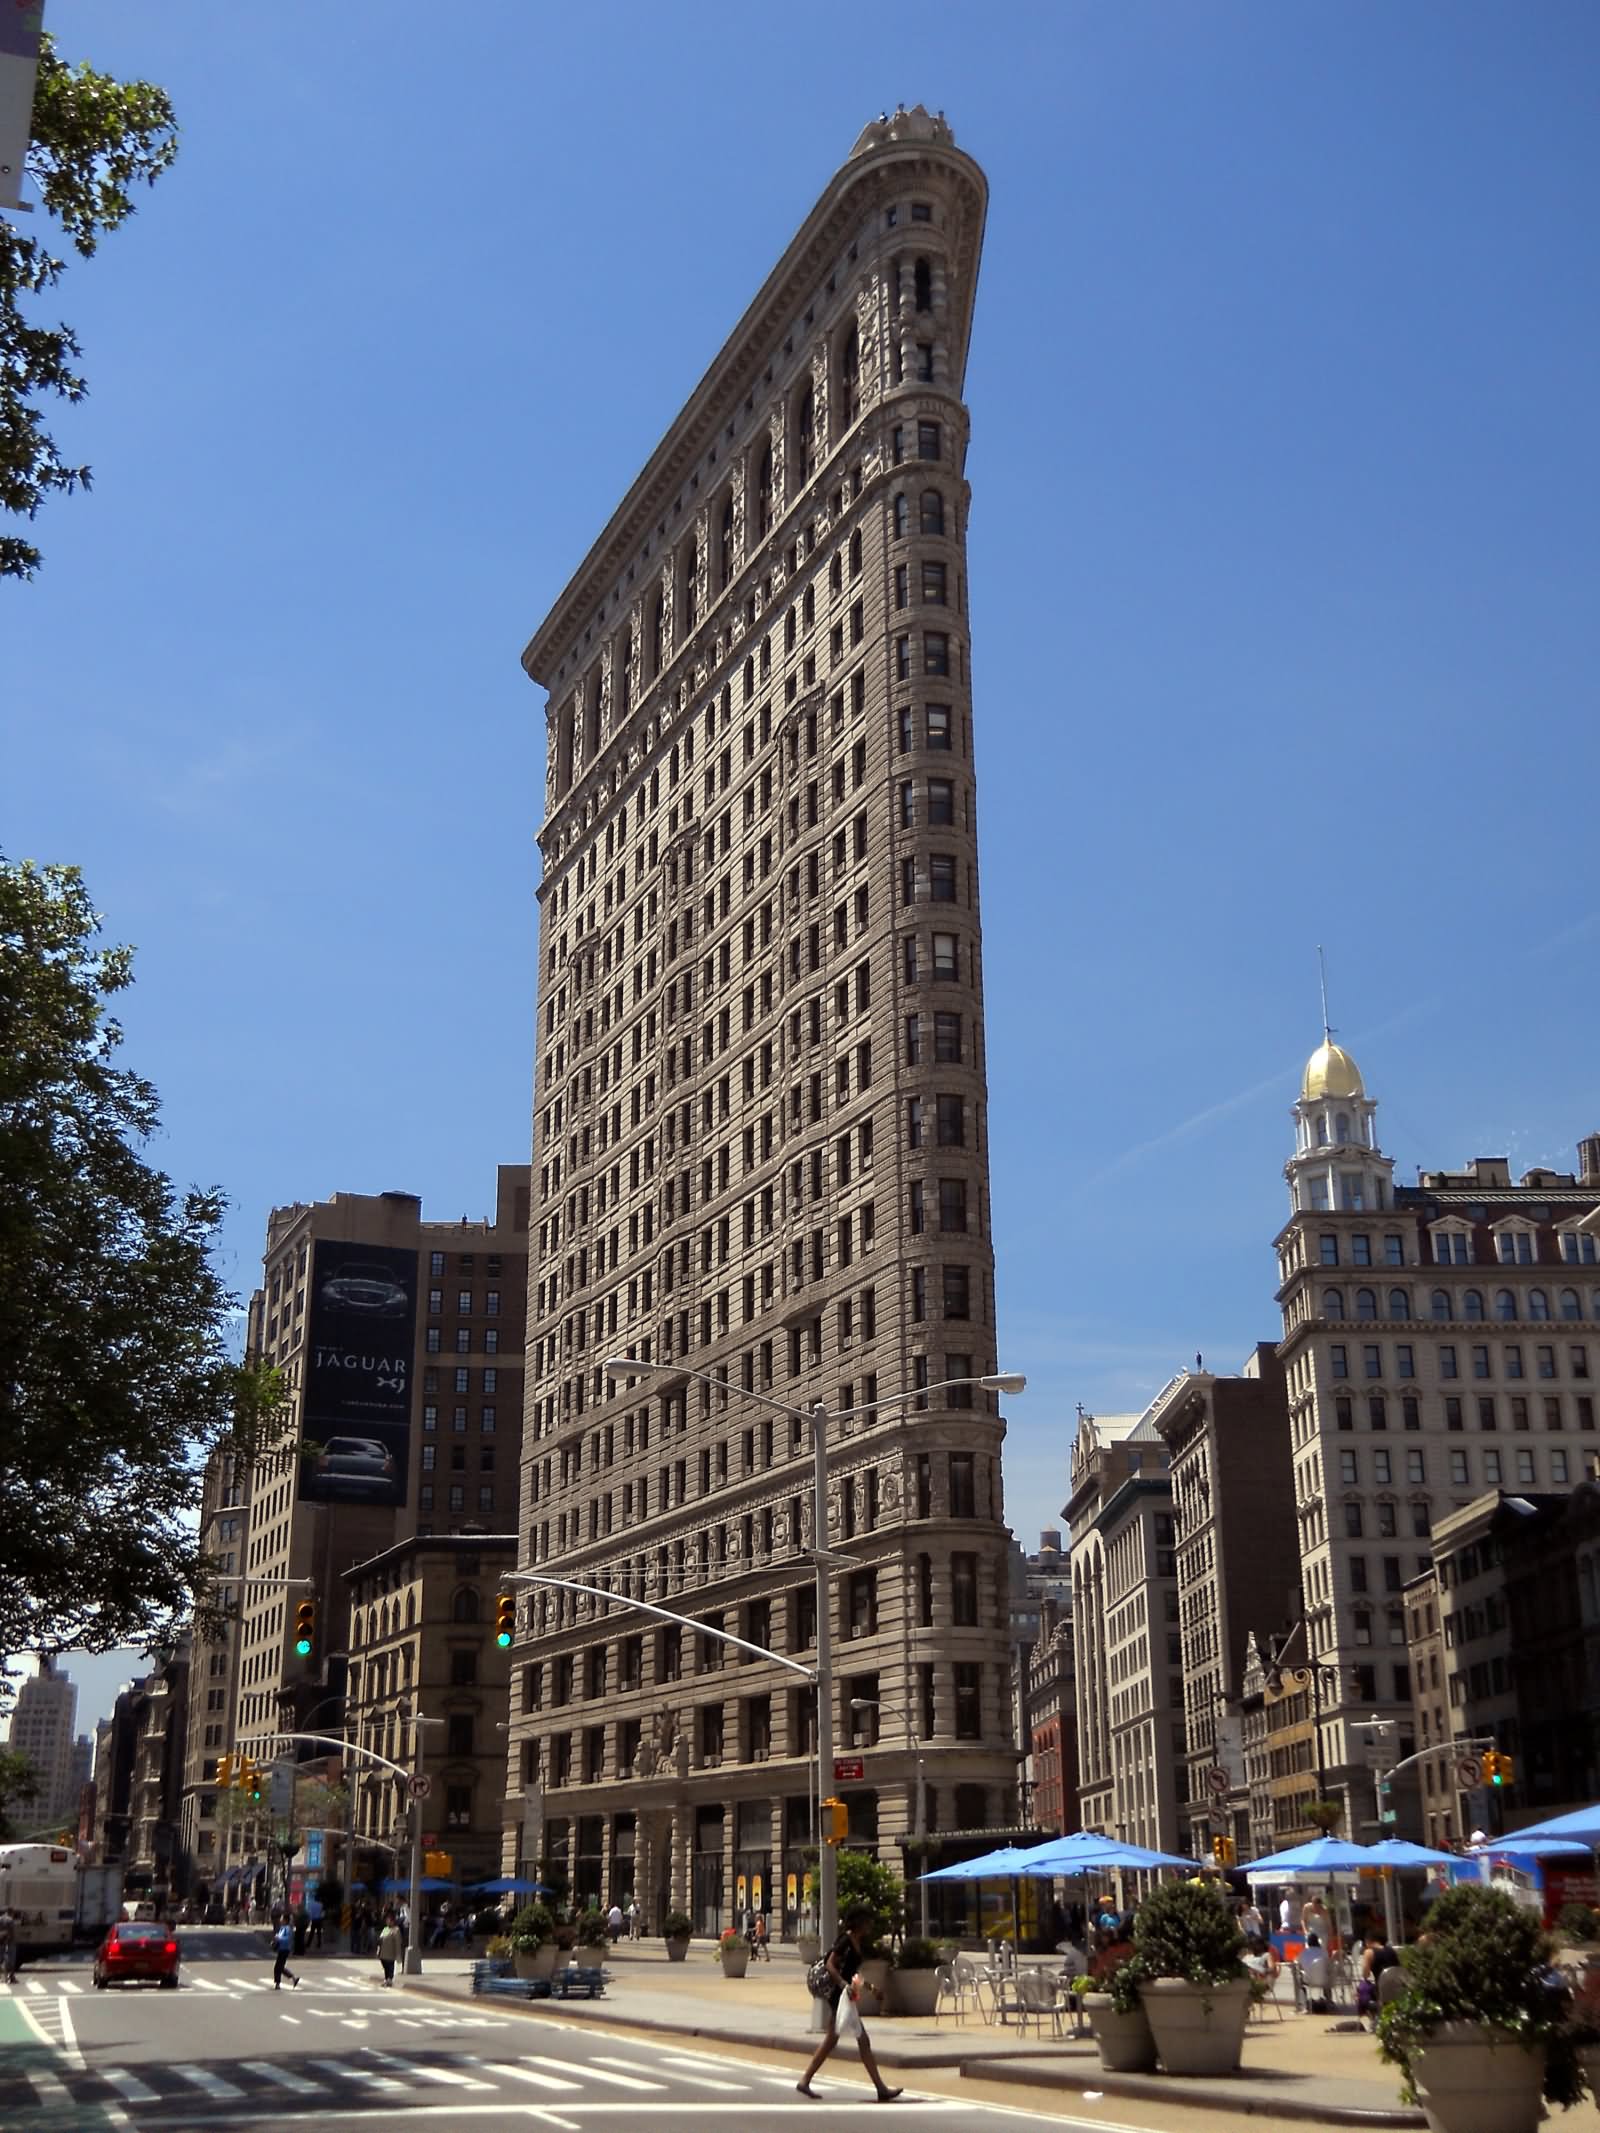 30 Very Beautiful Flatiron Building, Manhattan Pictures And Photos